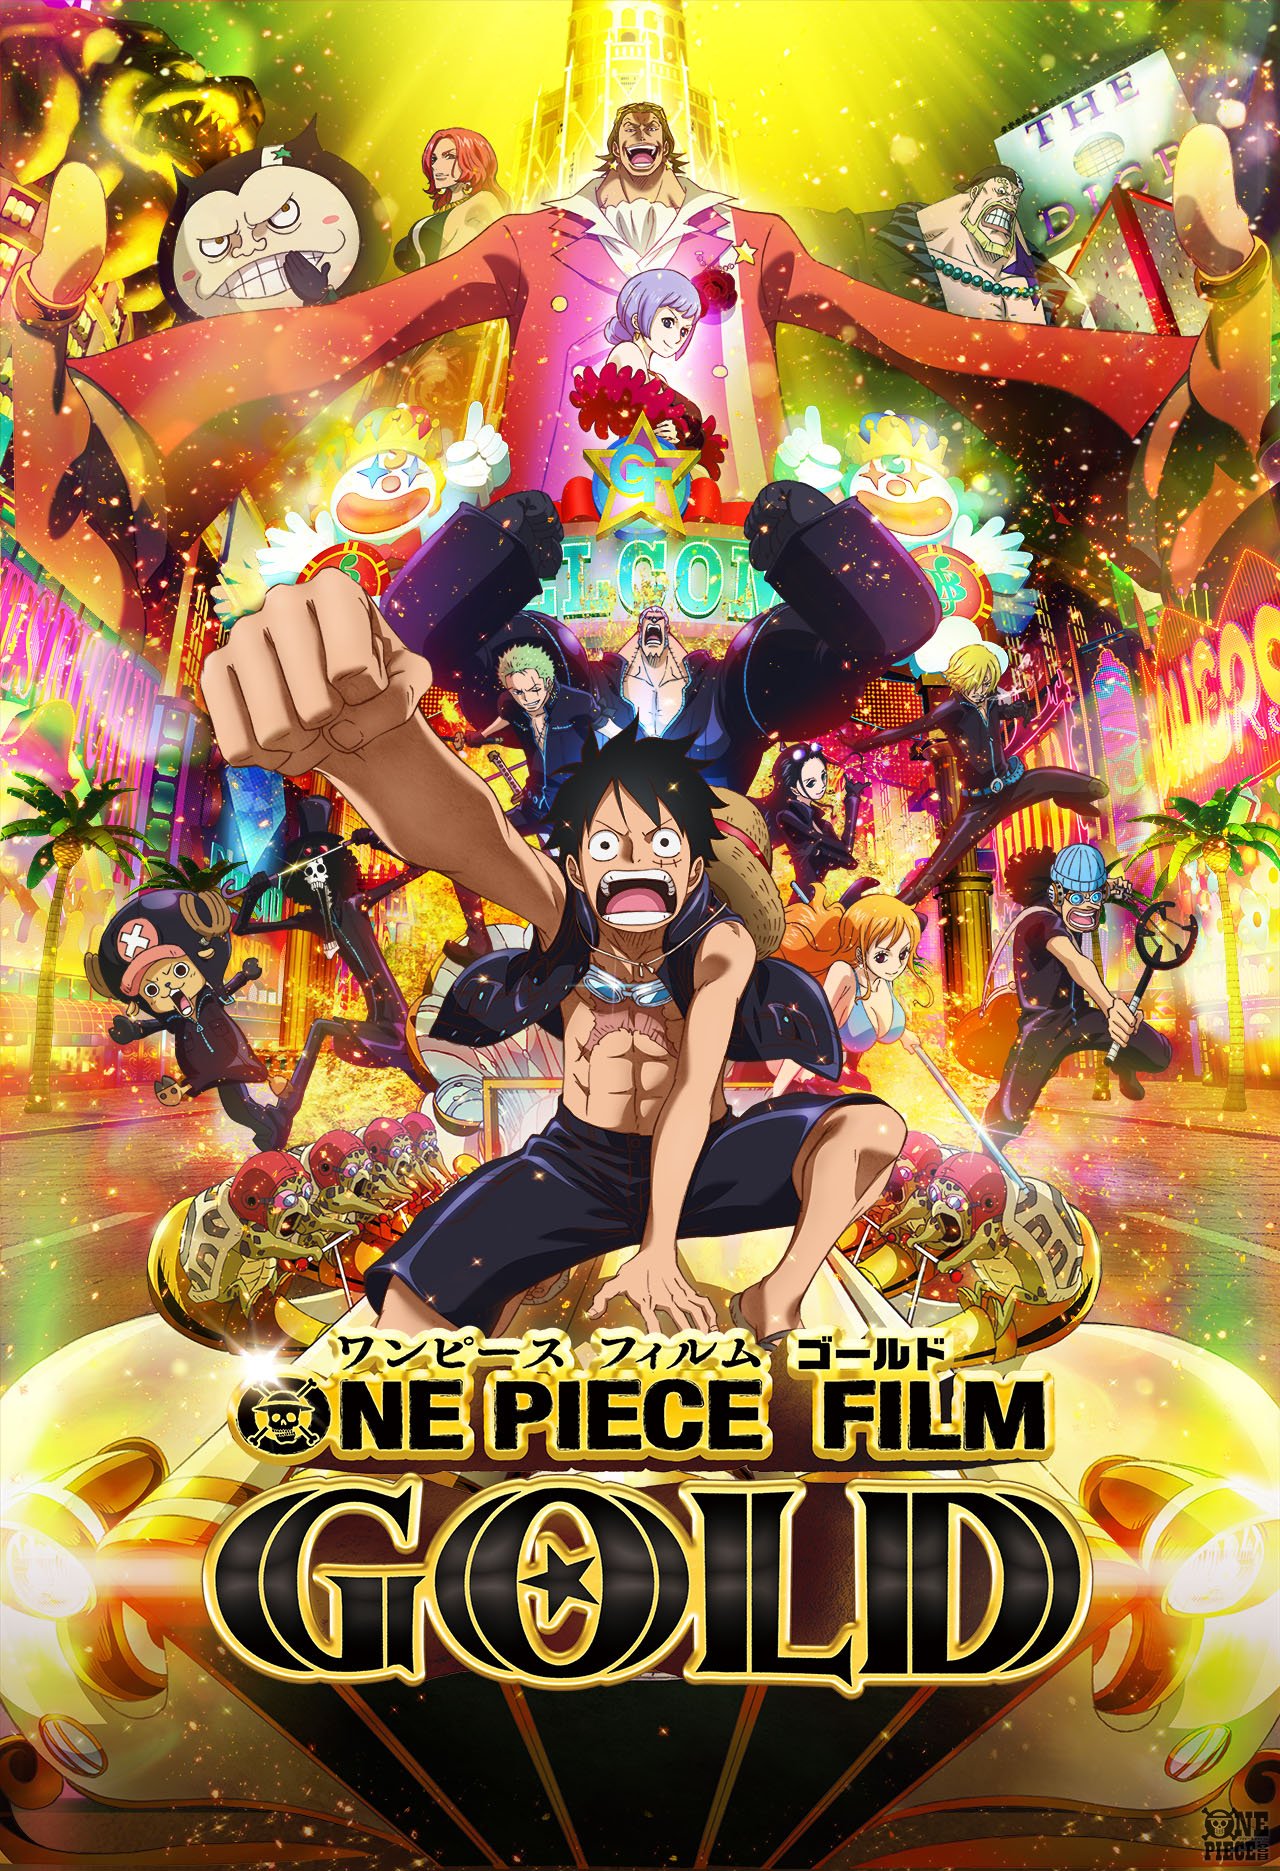 One Piece Com ワンピース One Piece Com ニュース 劇場版 One Piece Film Gold 5月19日 土 夜9時より地上波初放送 T Co 8j0hxnrdlt T Co X2p9t3lzxi Twitter